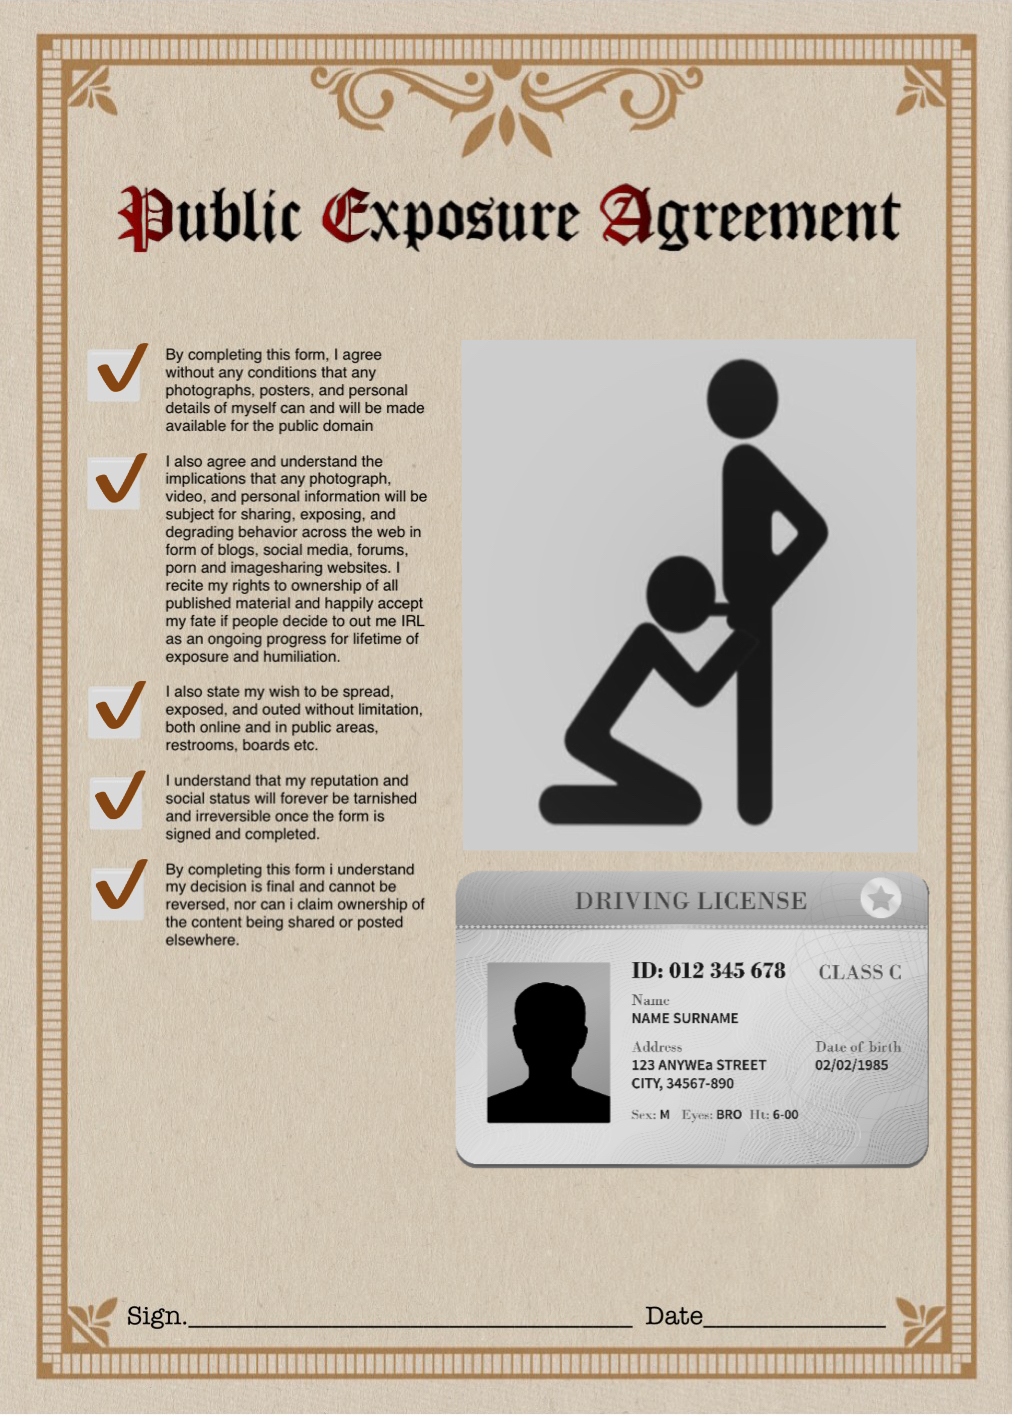 Public Exposure Agreement form Toplosers